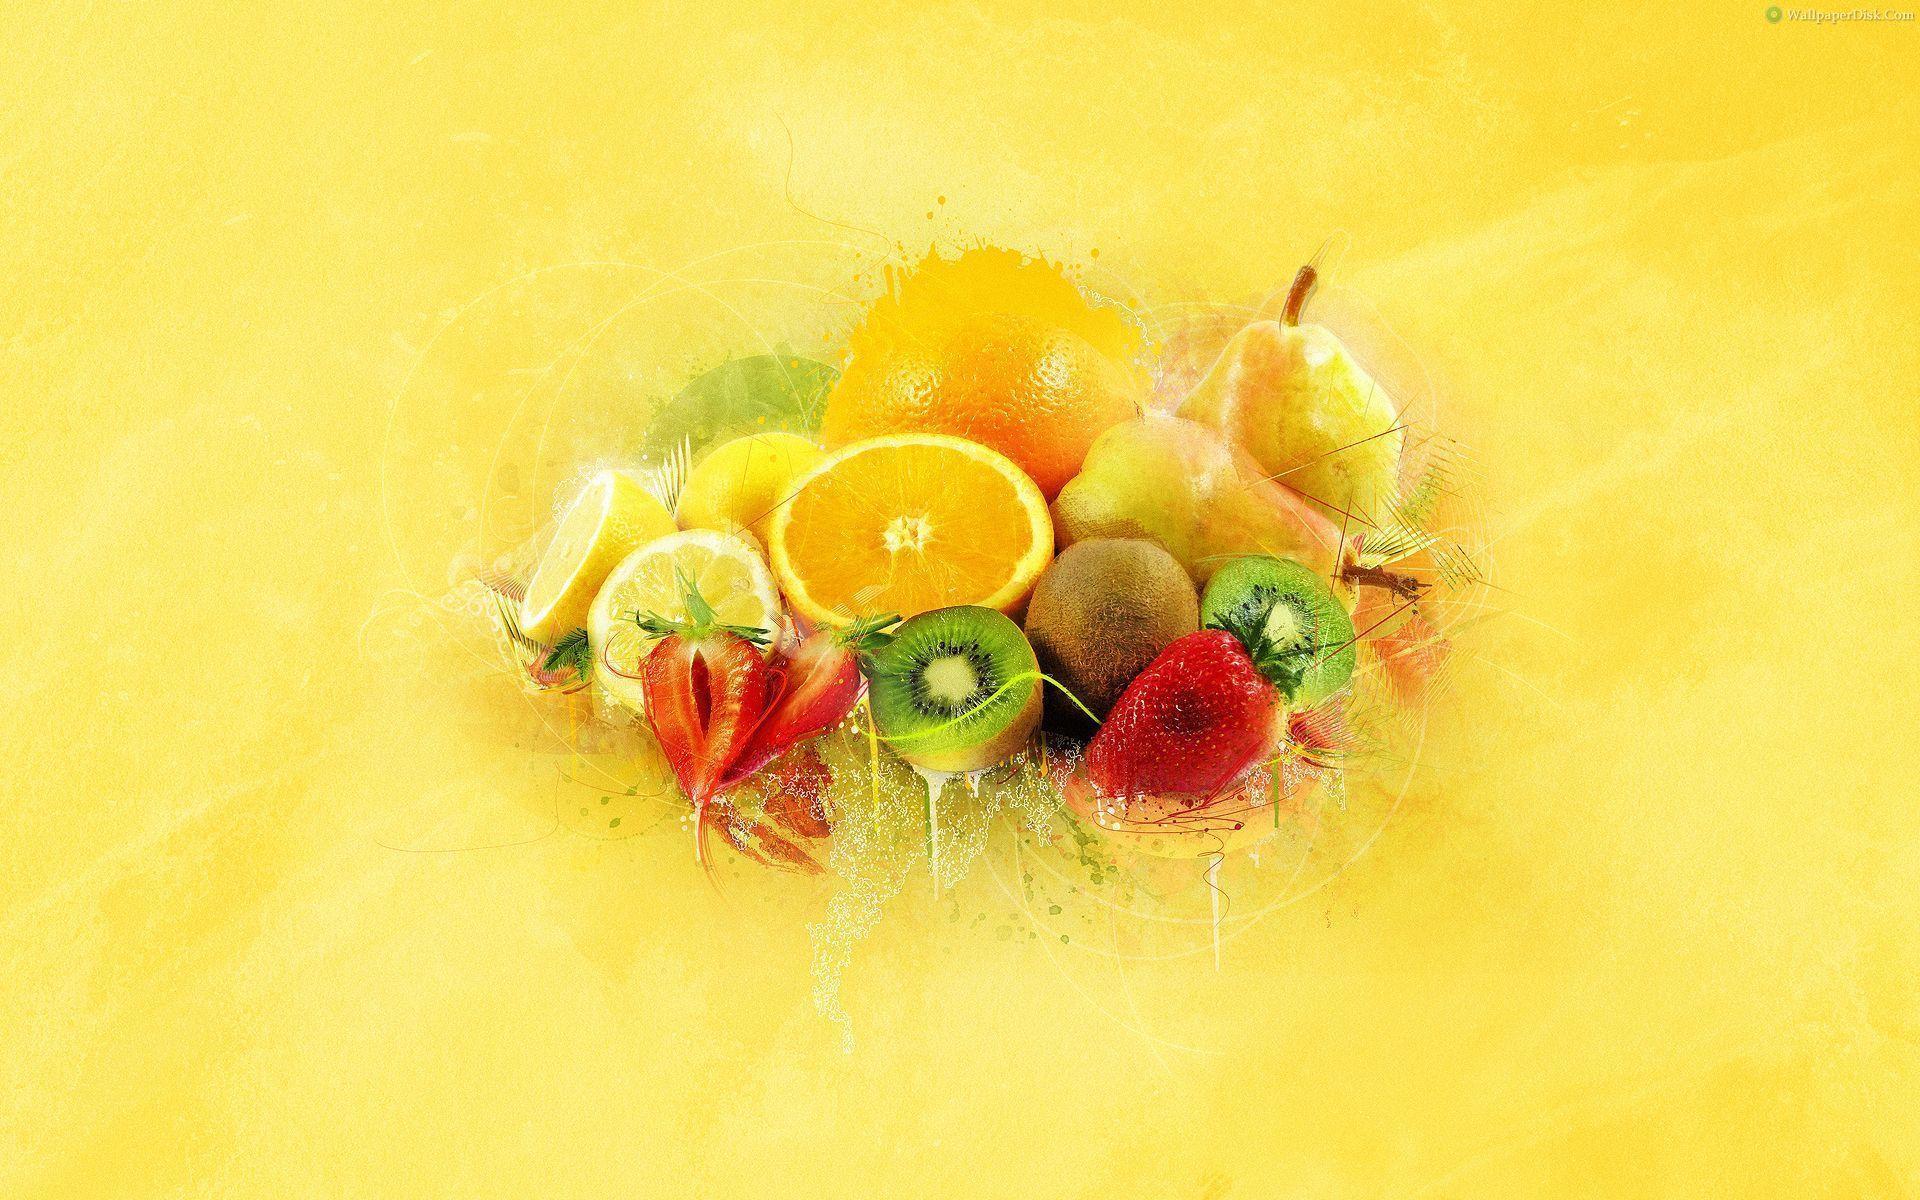 Fruit wallpaper 173592